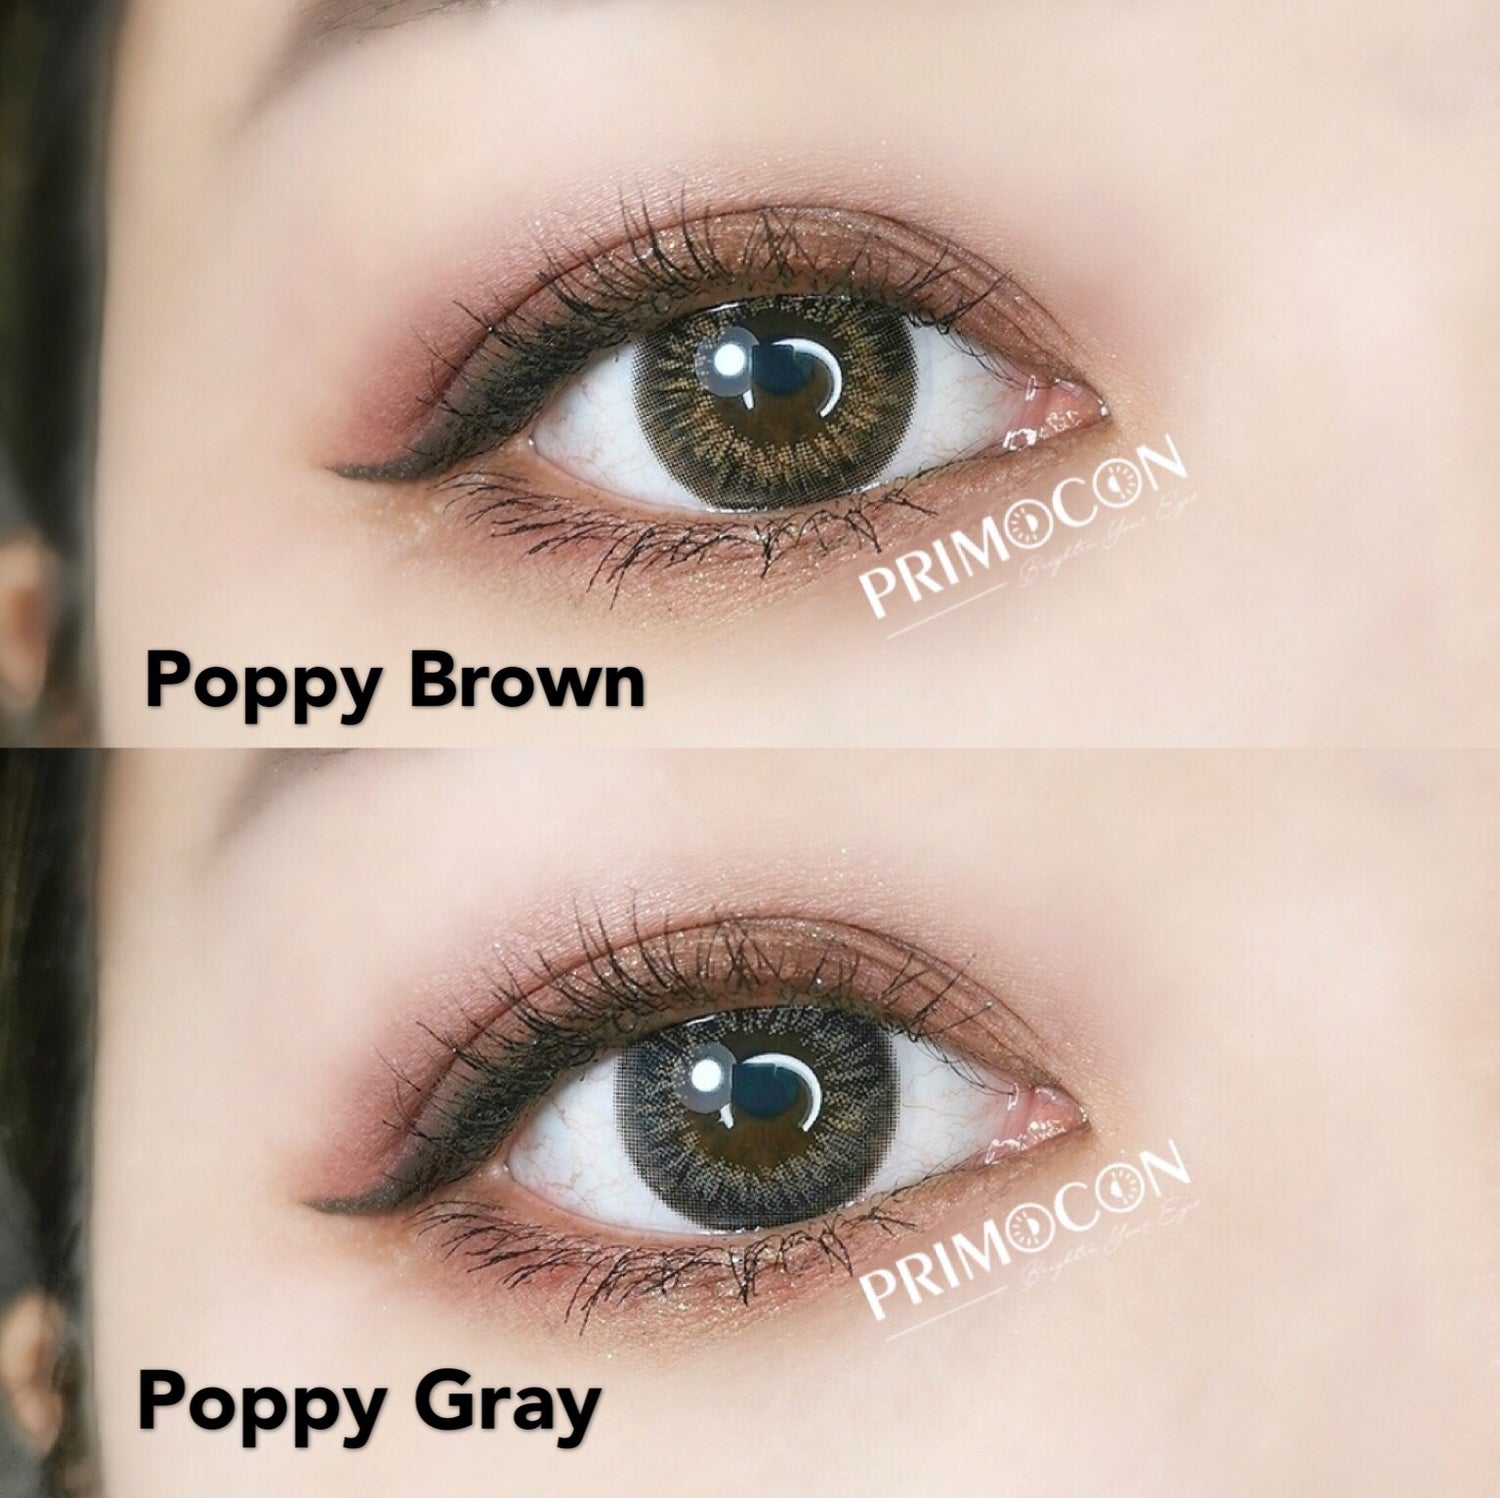 Poppy Gray - Primocon